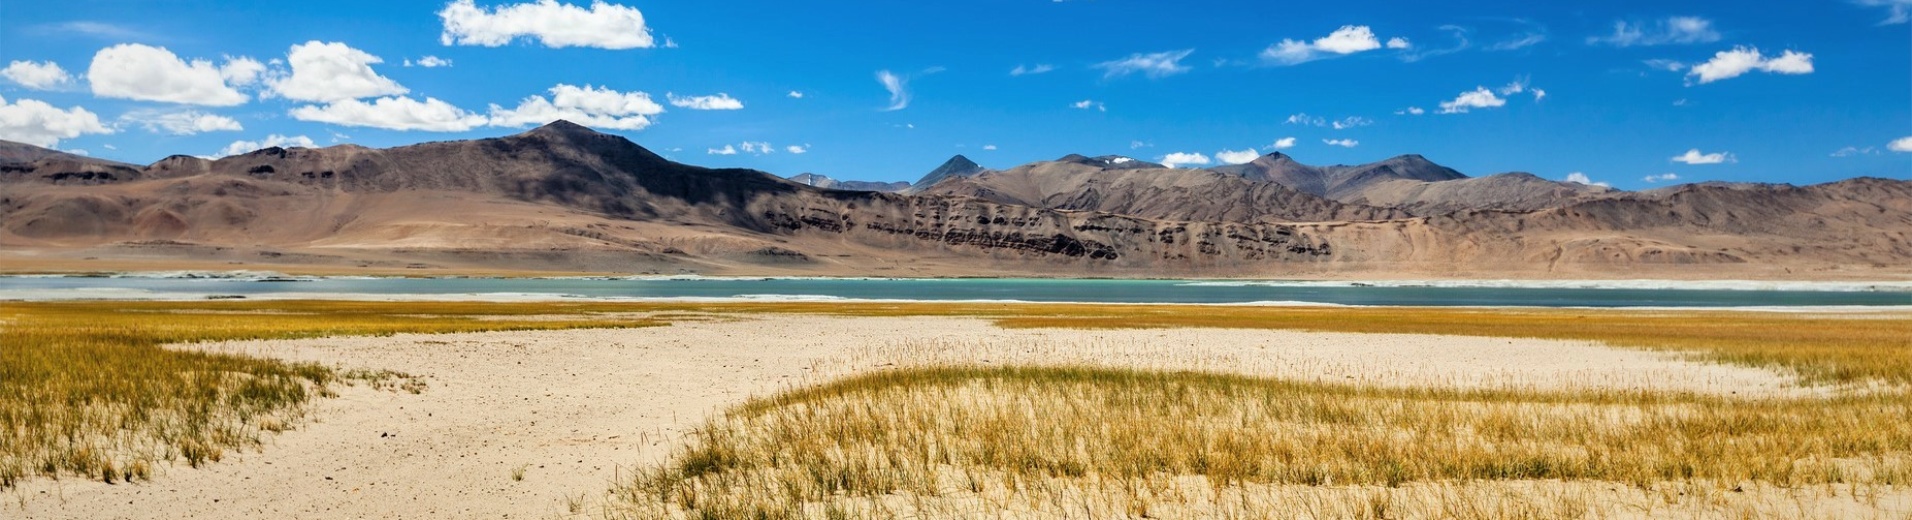 Ciel bleu au dessus du Lac Tso Kar, Ladakh